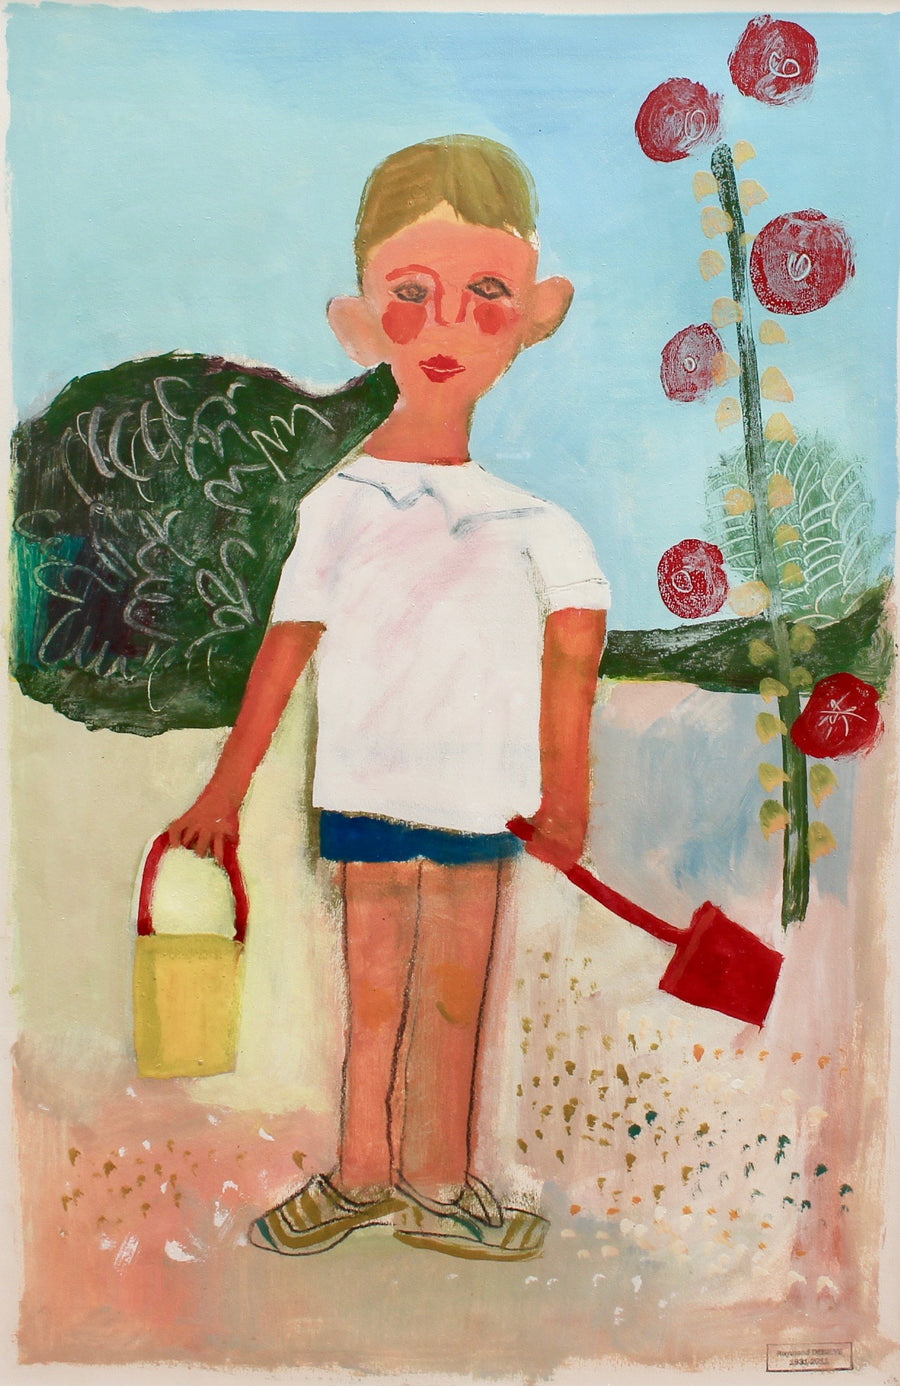 'Portrait of Boy with Pail and Shovel' by Raymond Dèbieve (circa 1960s)